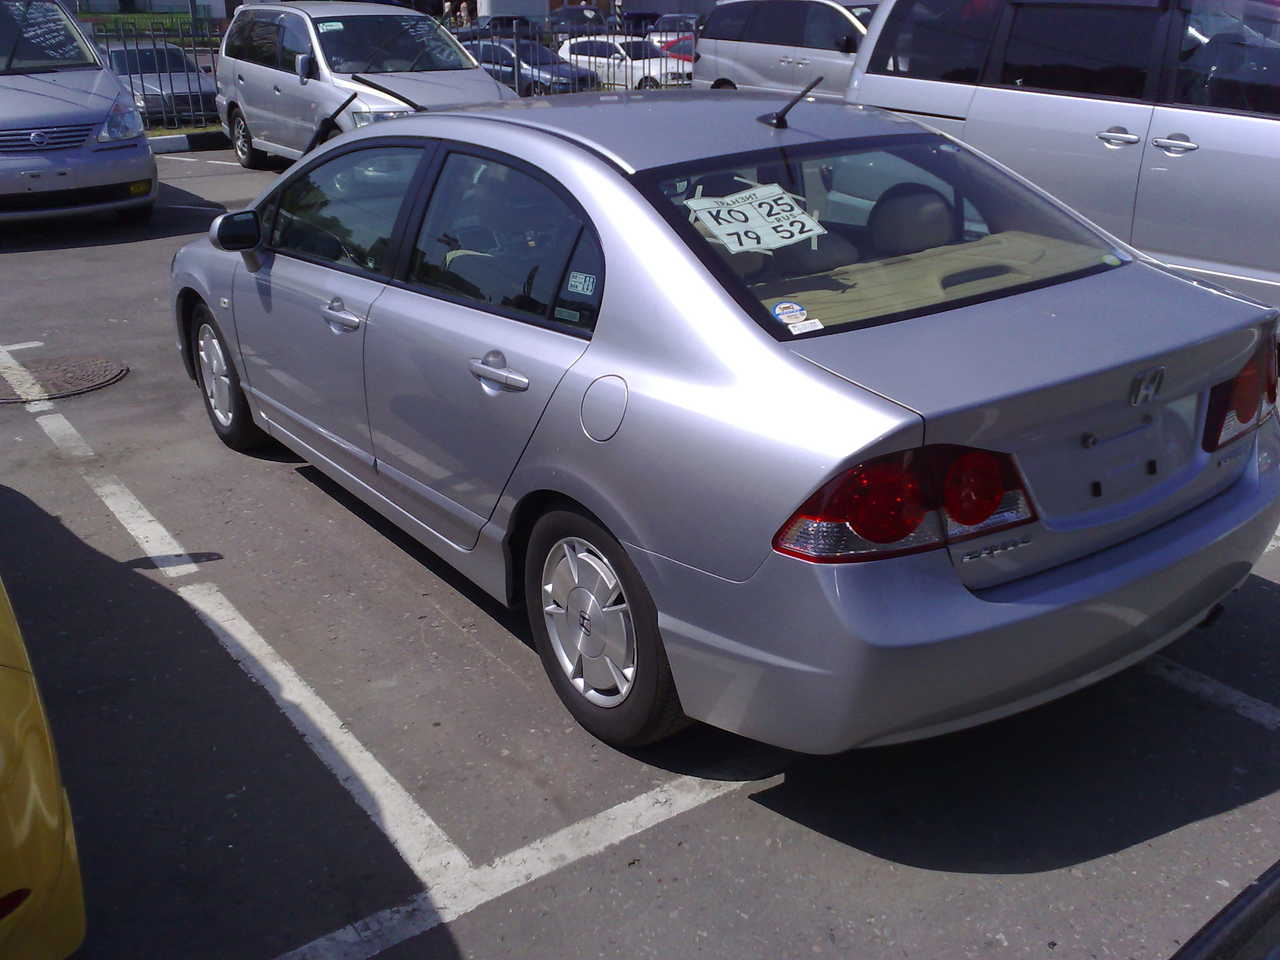 2006 Civic honda hybrid review #7